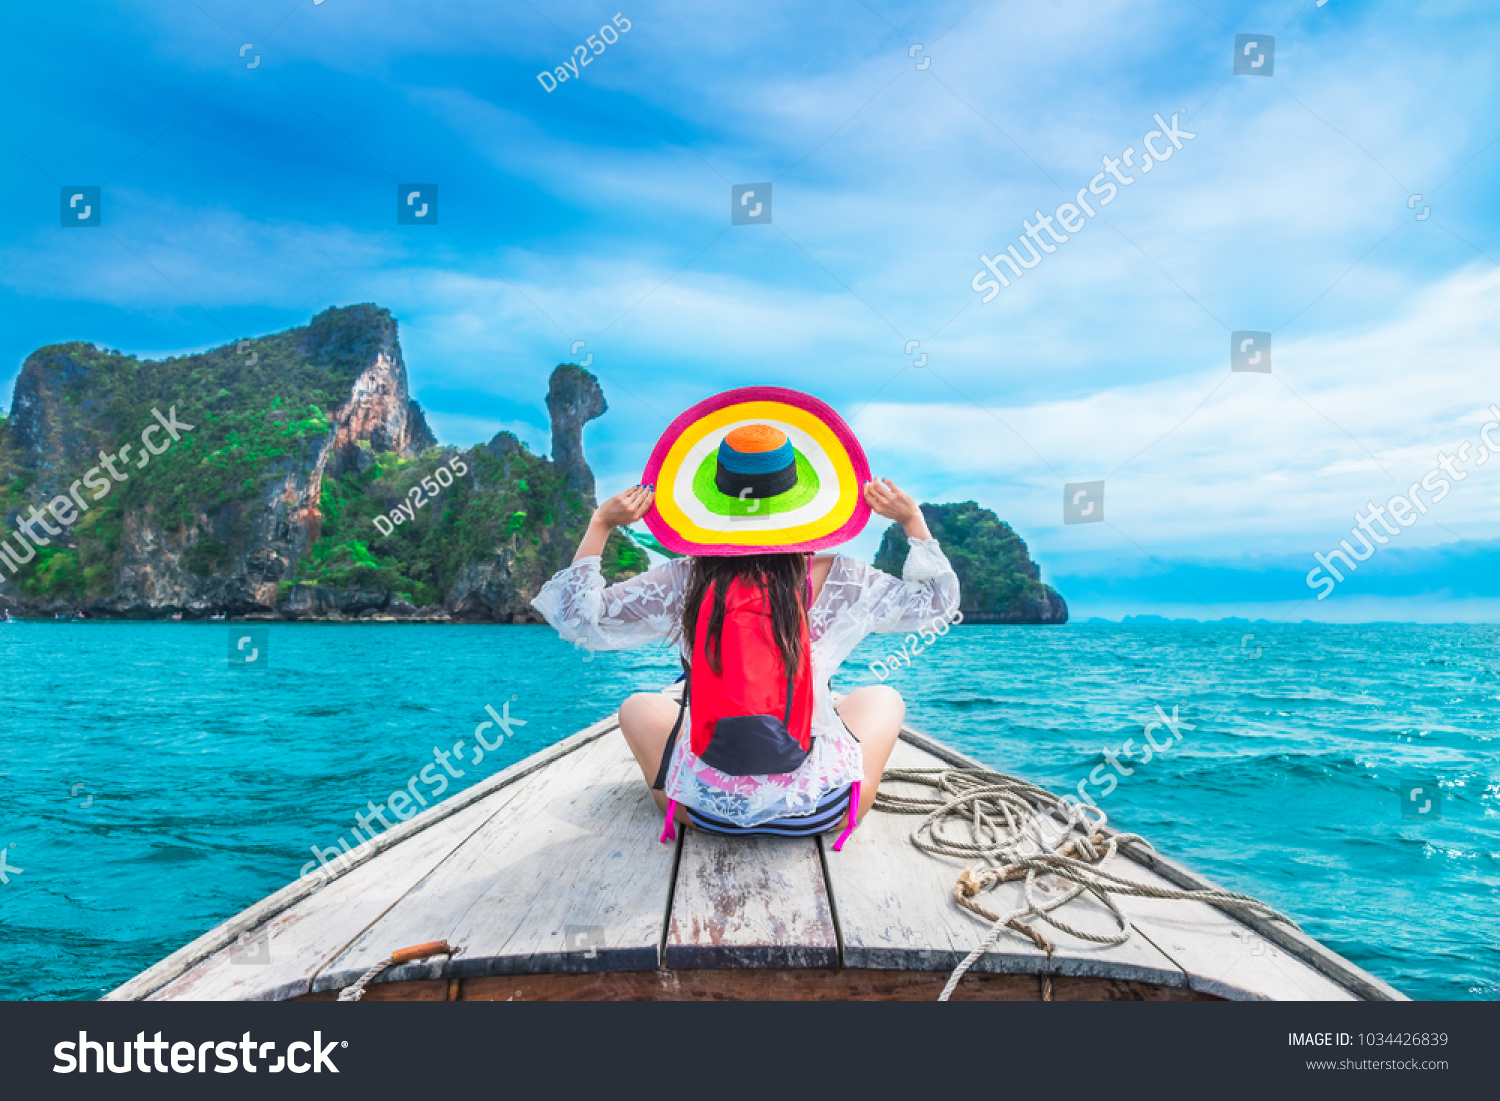 Summer lifestyle traveler woman in bikini and big hat joy relaxing on boat, Kai island, Andaman sea, Krabi, Travel Thailand, Beautiful destination landscape Asia, Summer holiday outdoor vacation trip #1034426839